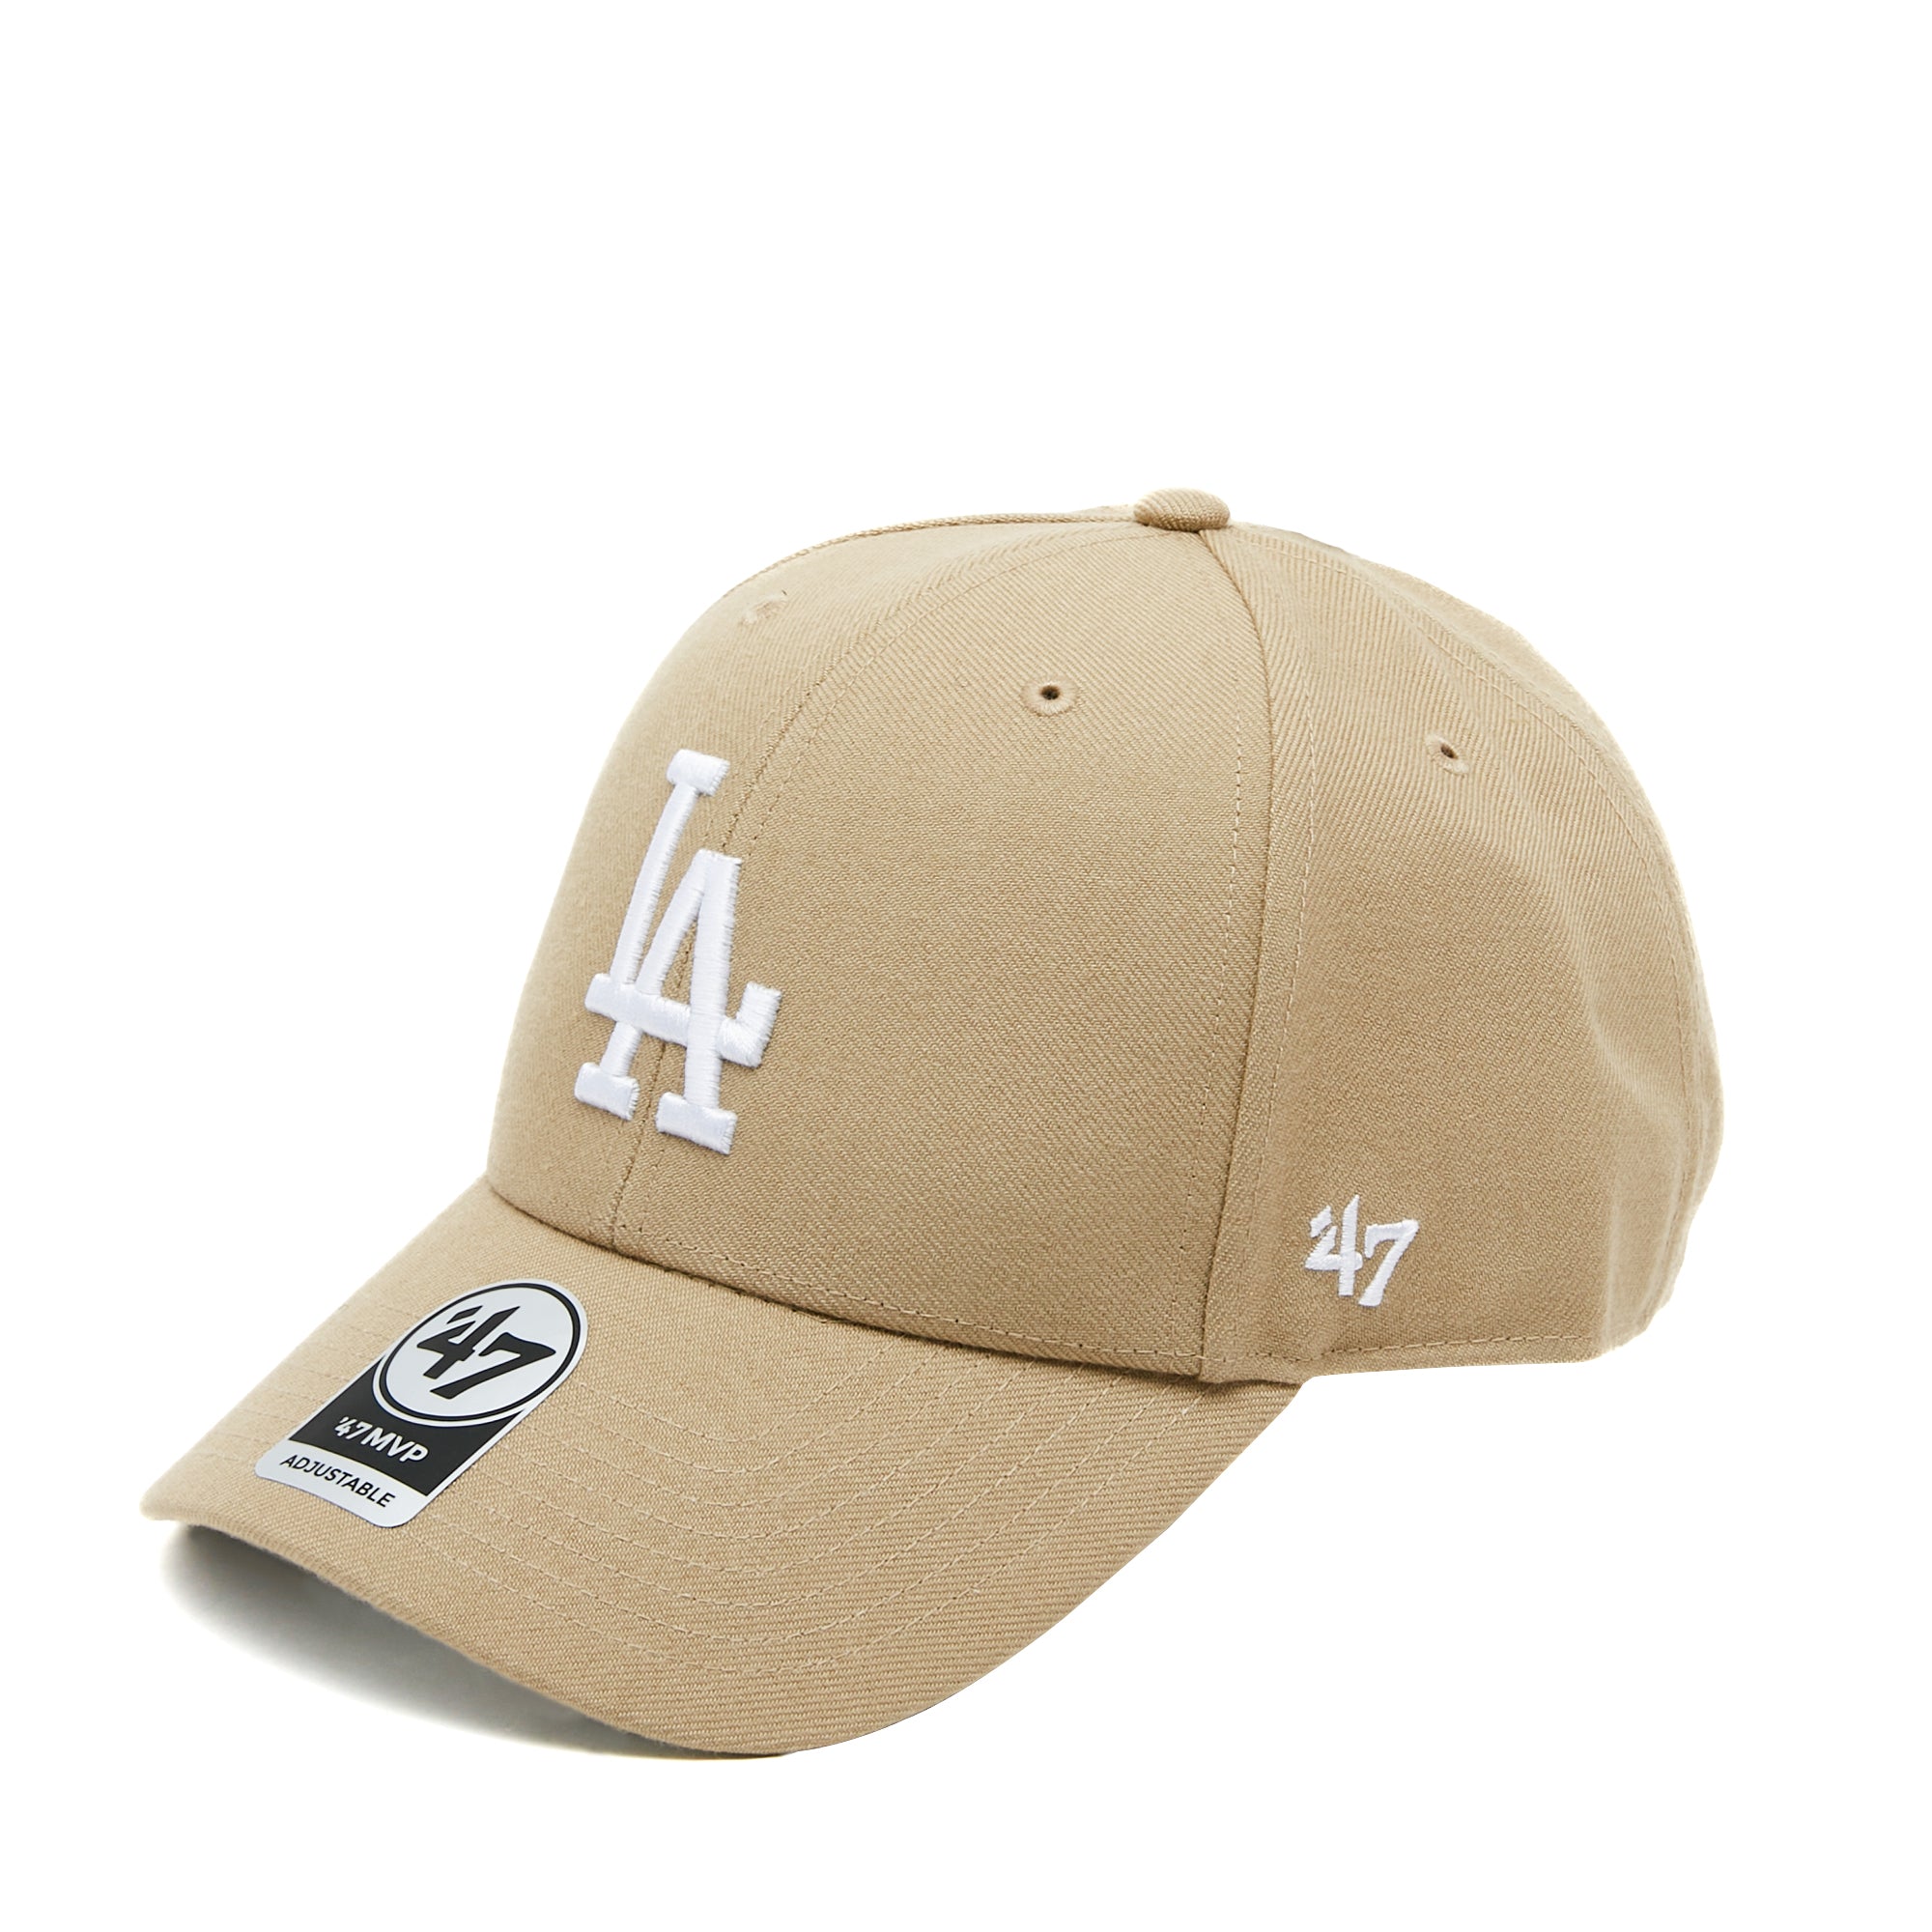 MLB Los Angeles Dodgers '47 MVP Cap Khaki One Size